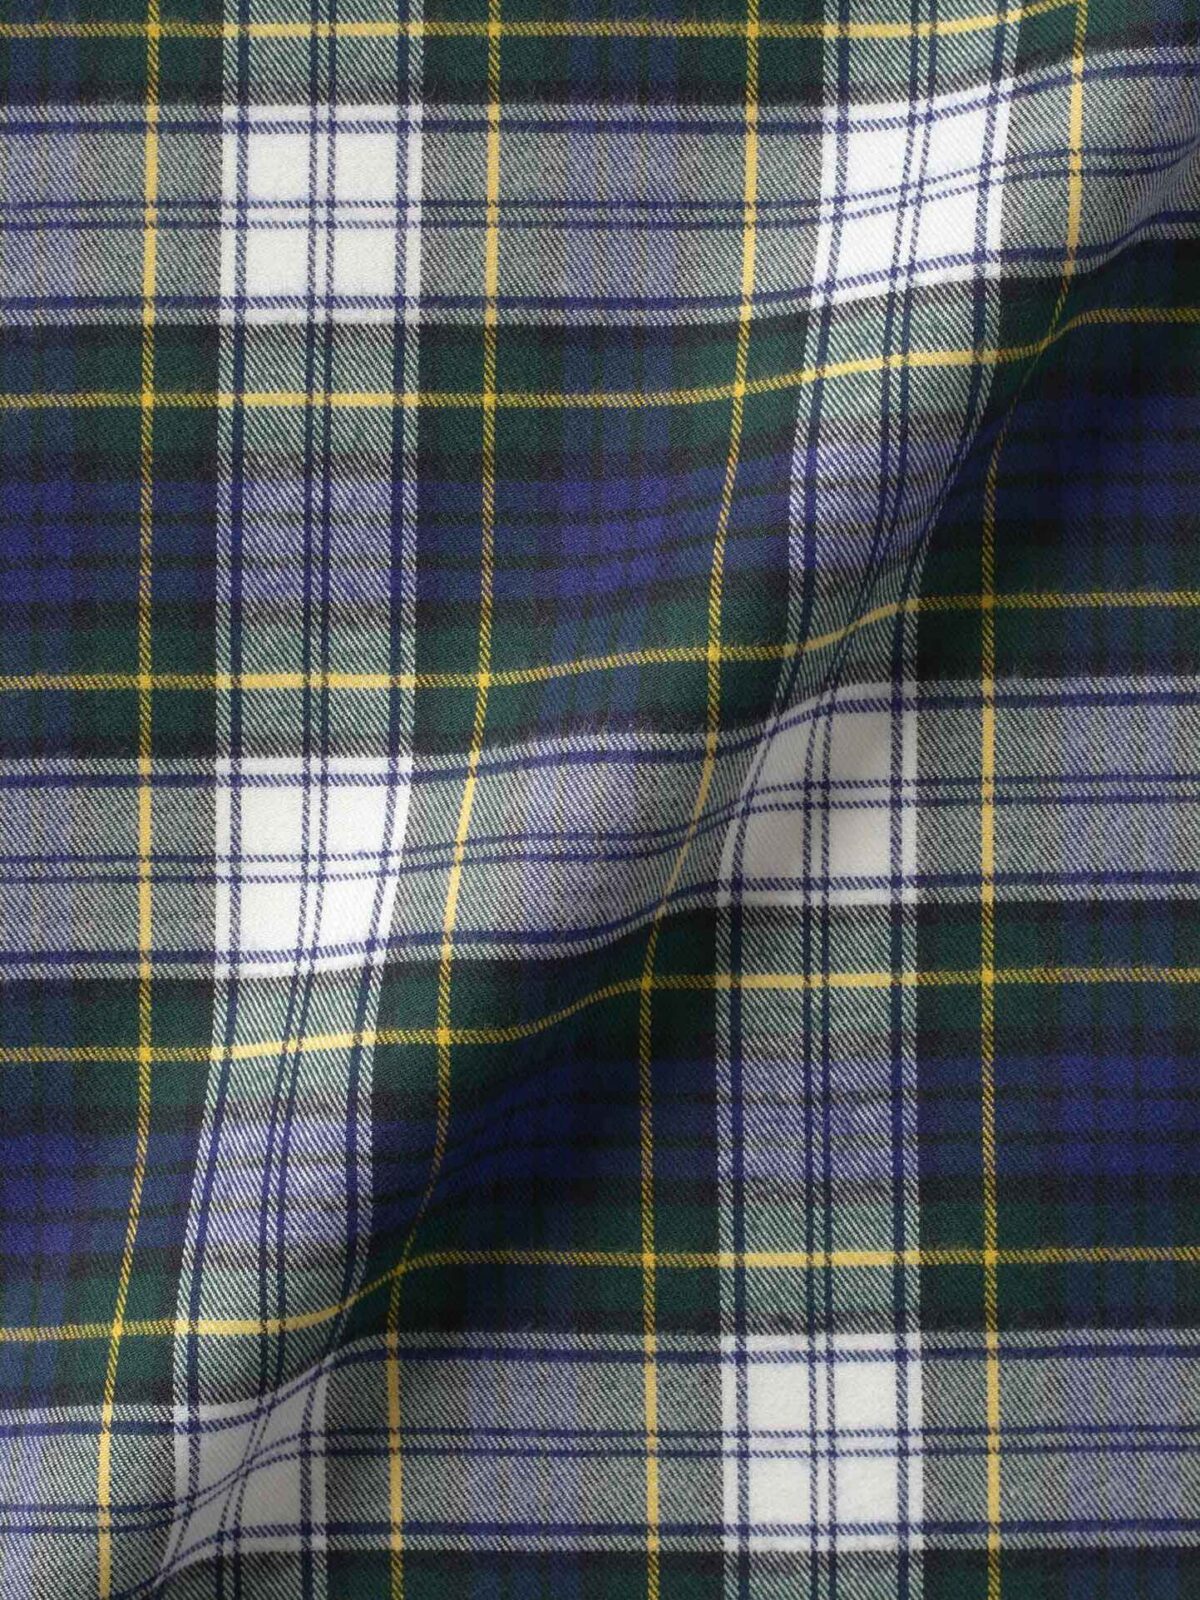 Tartan Plaid Flannel Fabric